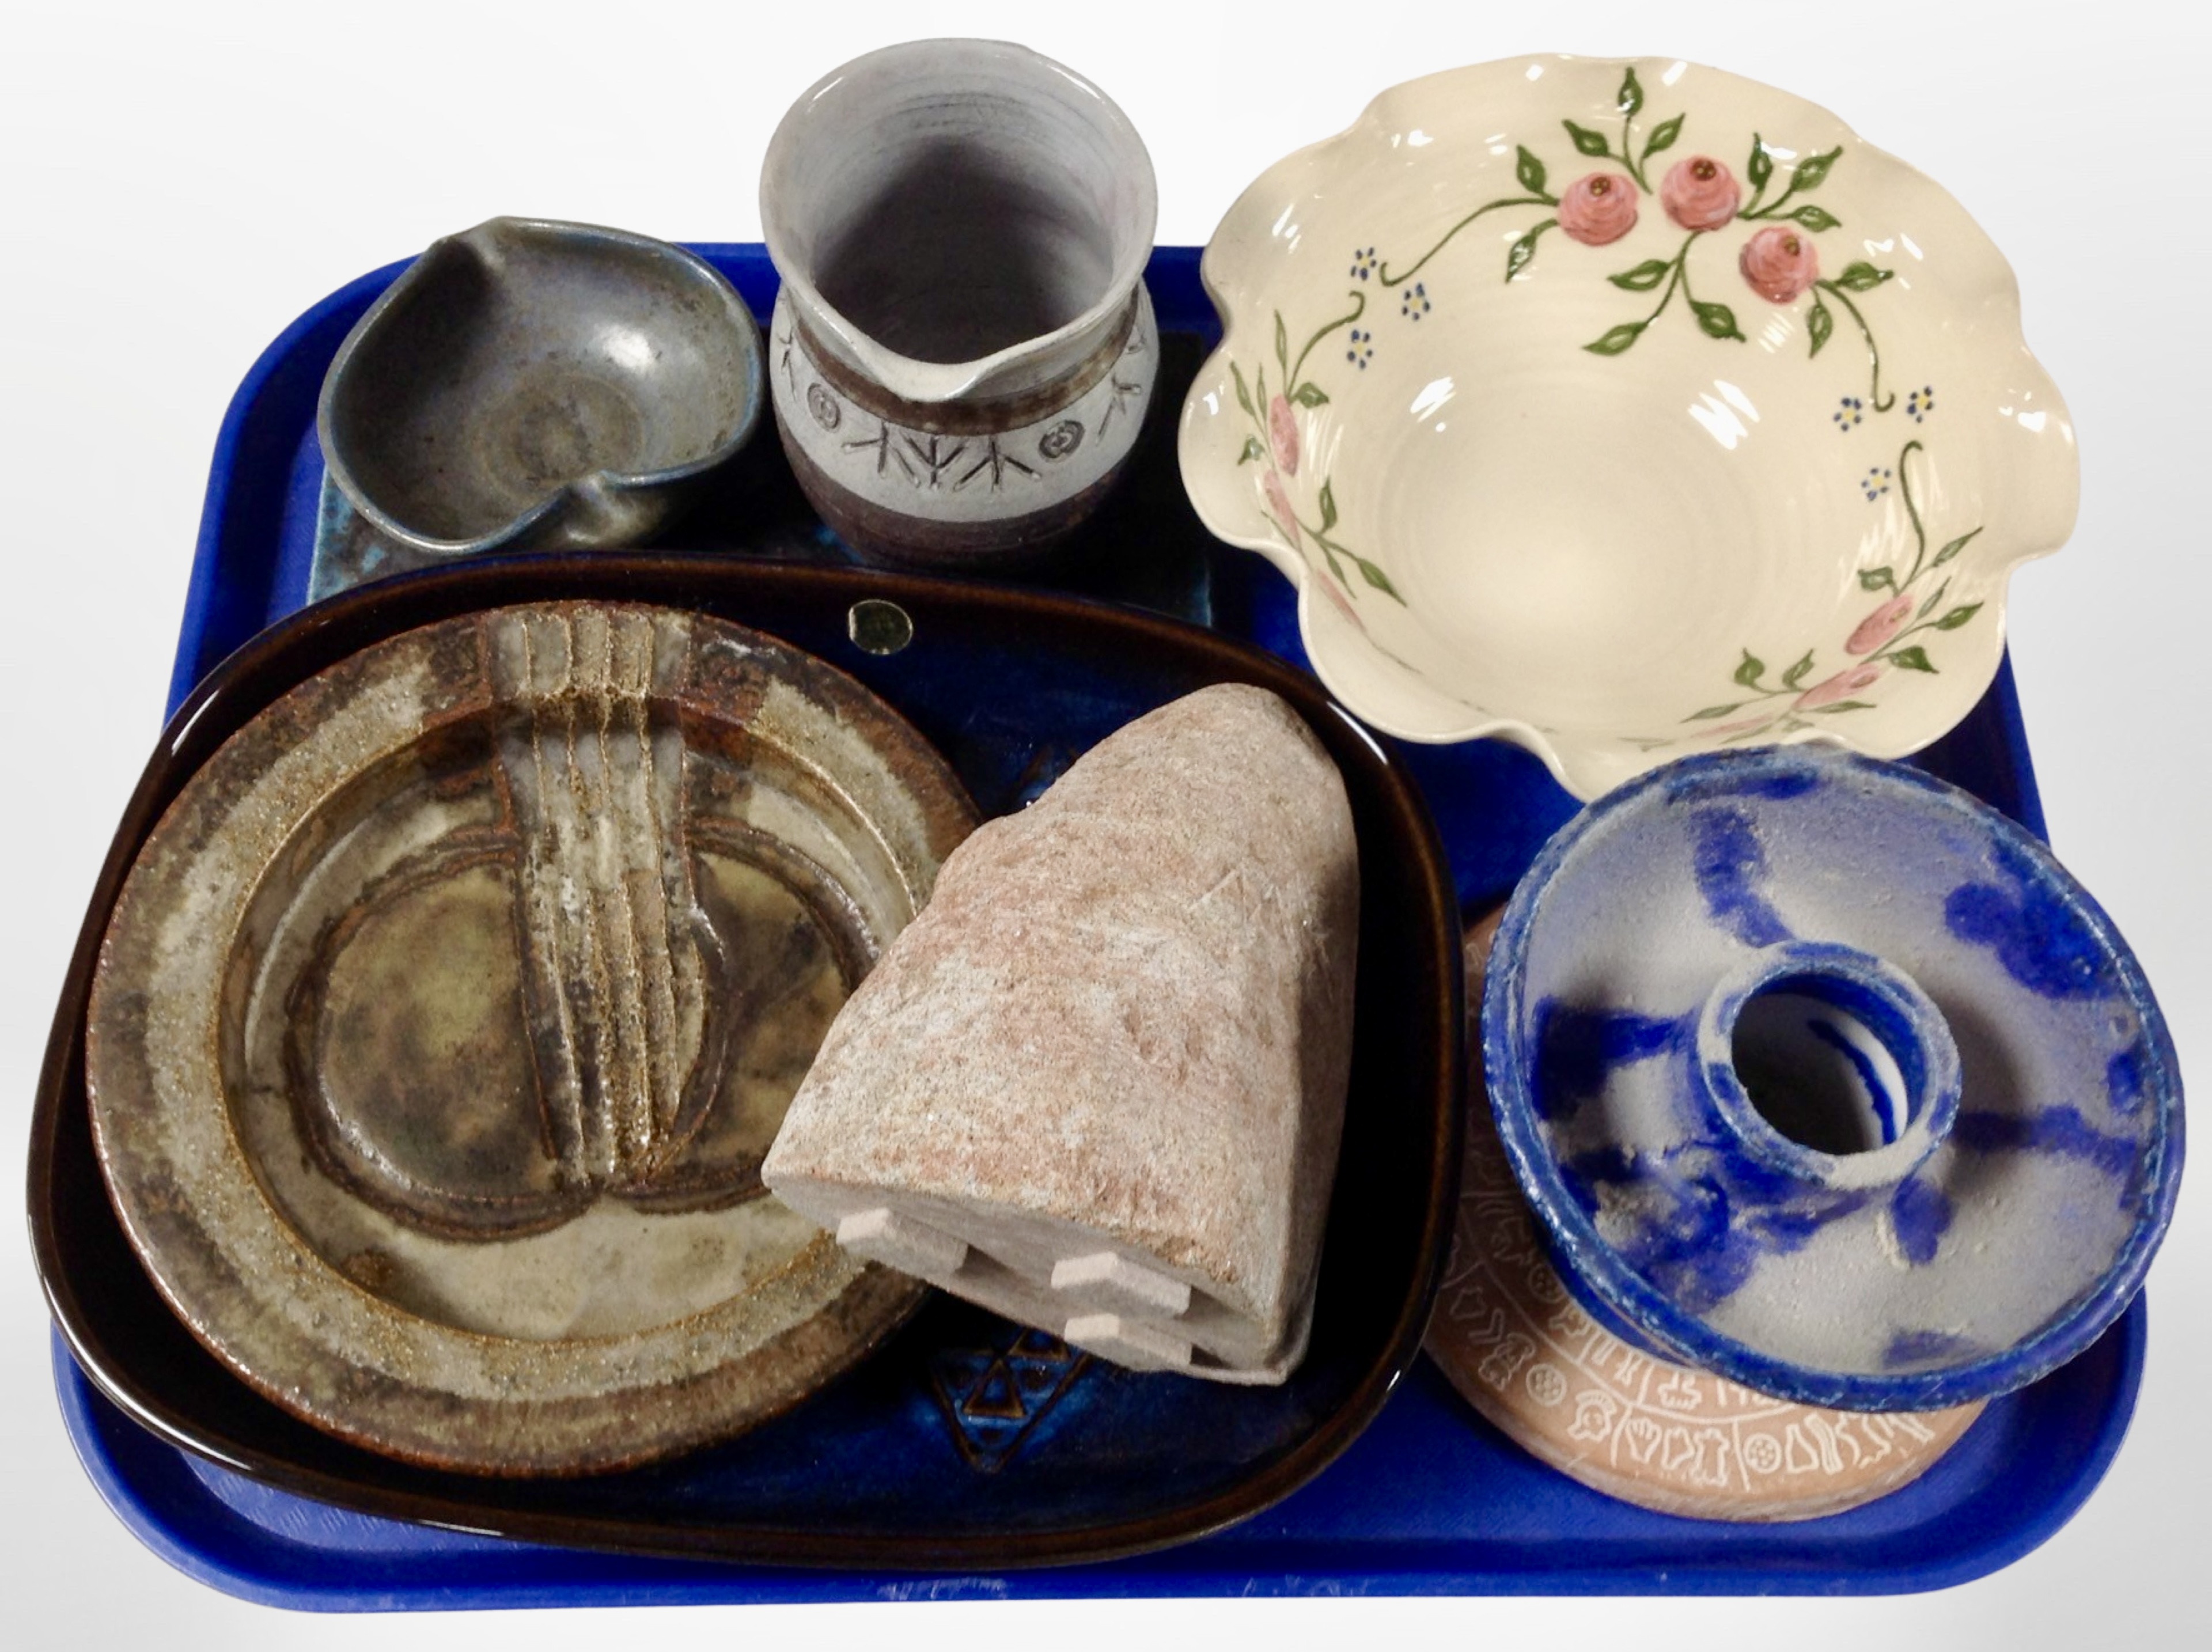 A group of Scandinavian studio pottery wares including bowls, jug, figural granite carving, etc.